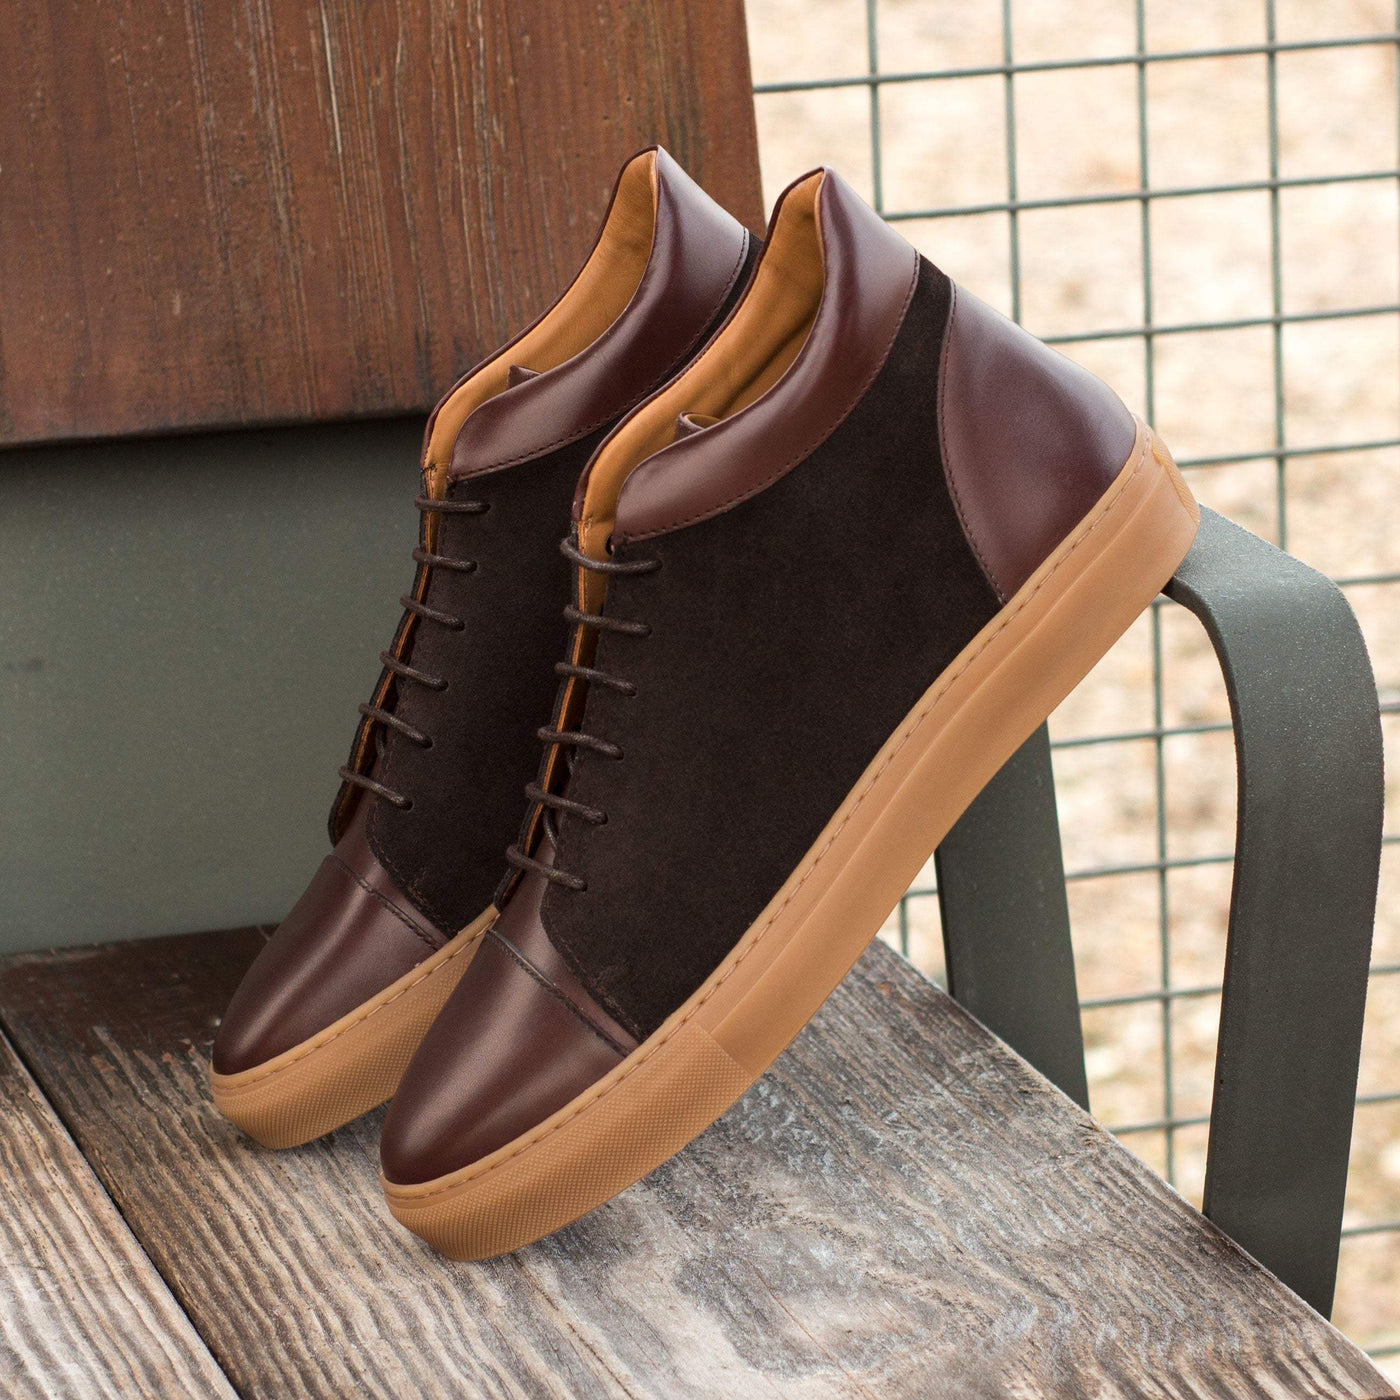 Men's High Top Sneakers Leather Dark Brown 4010 1- MERRIMIUM--GID-1447-4010